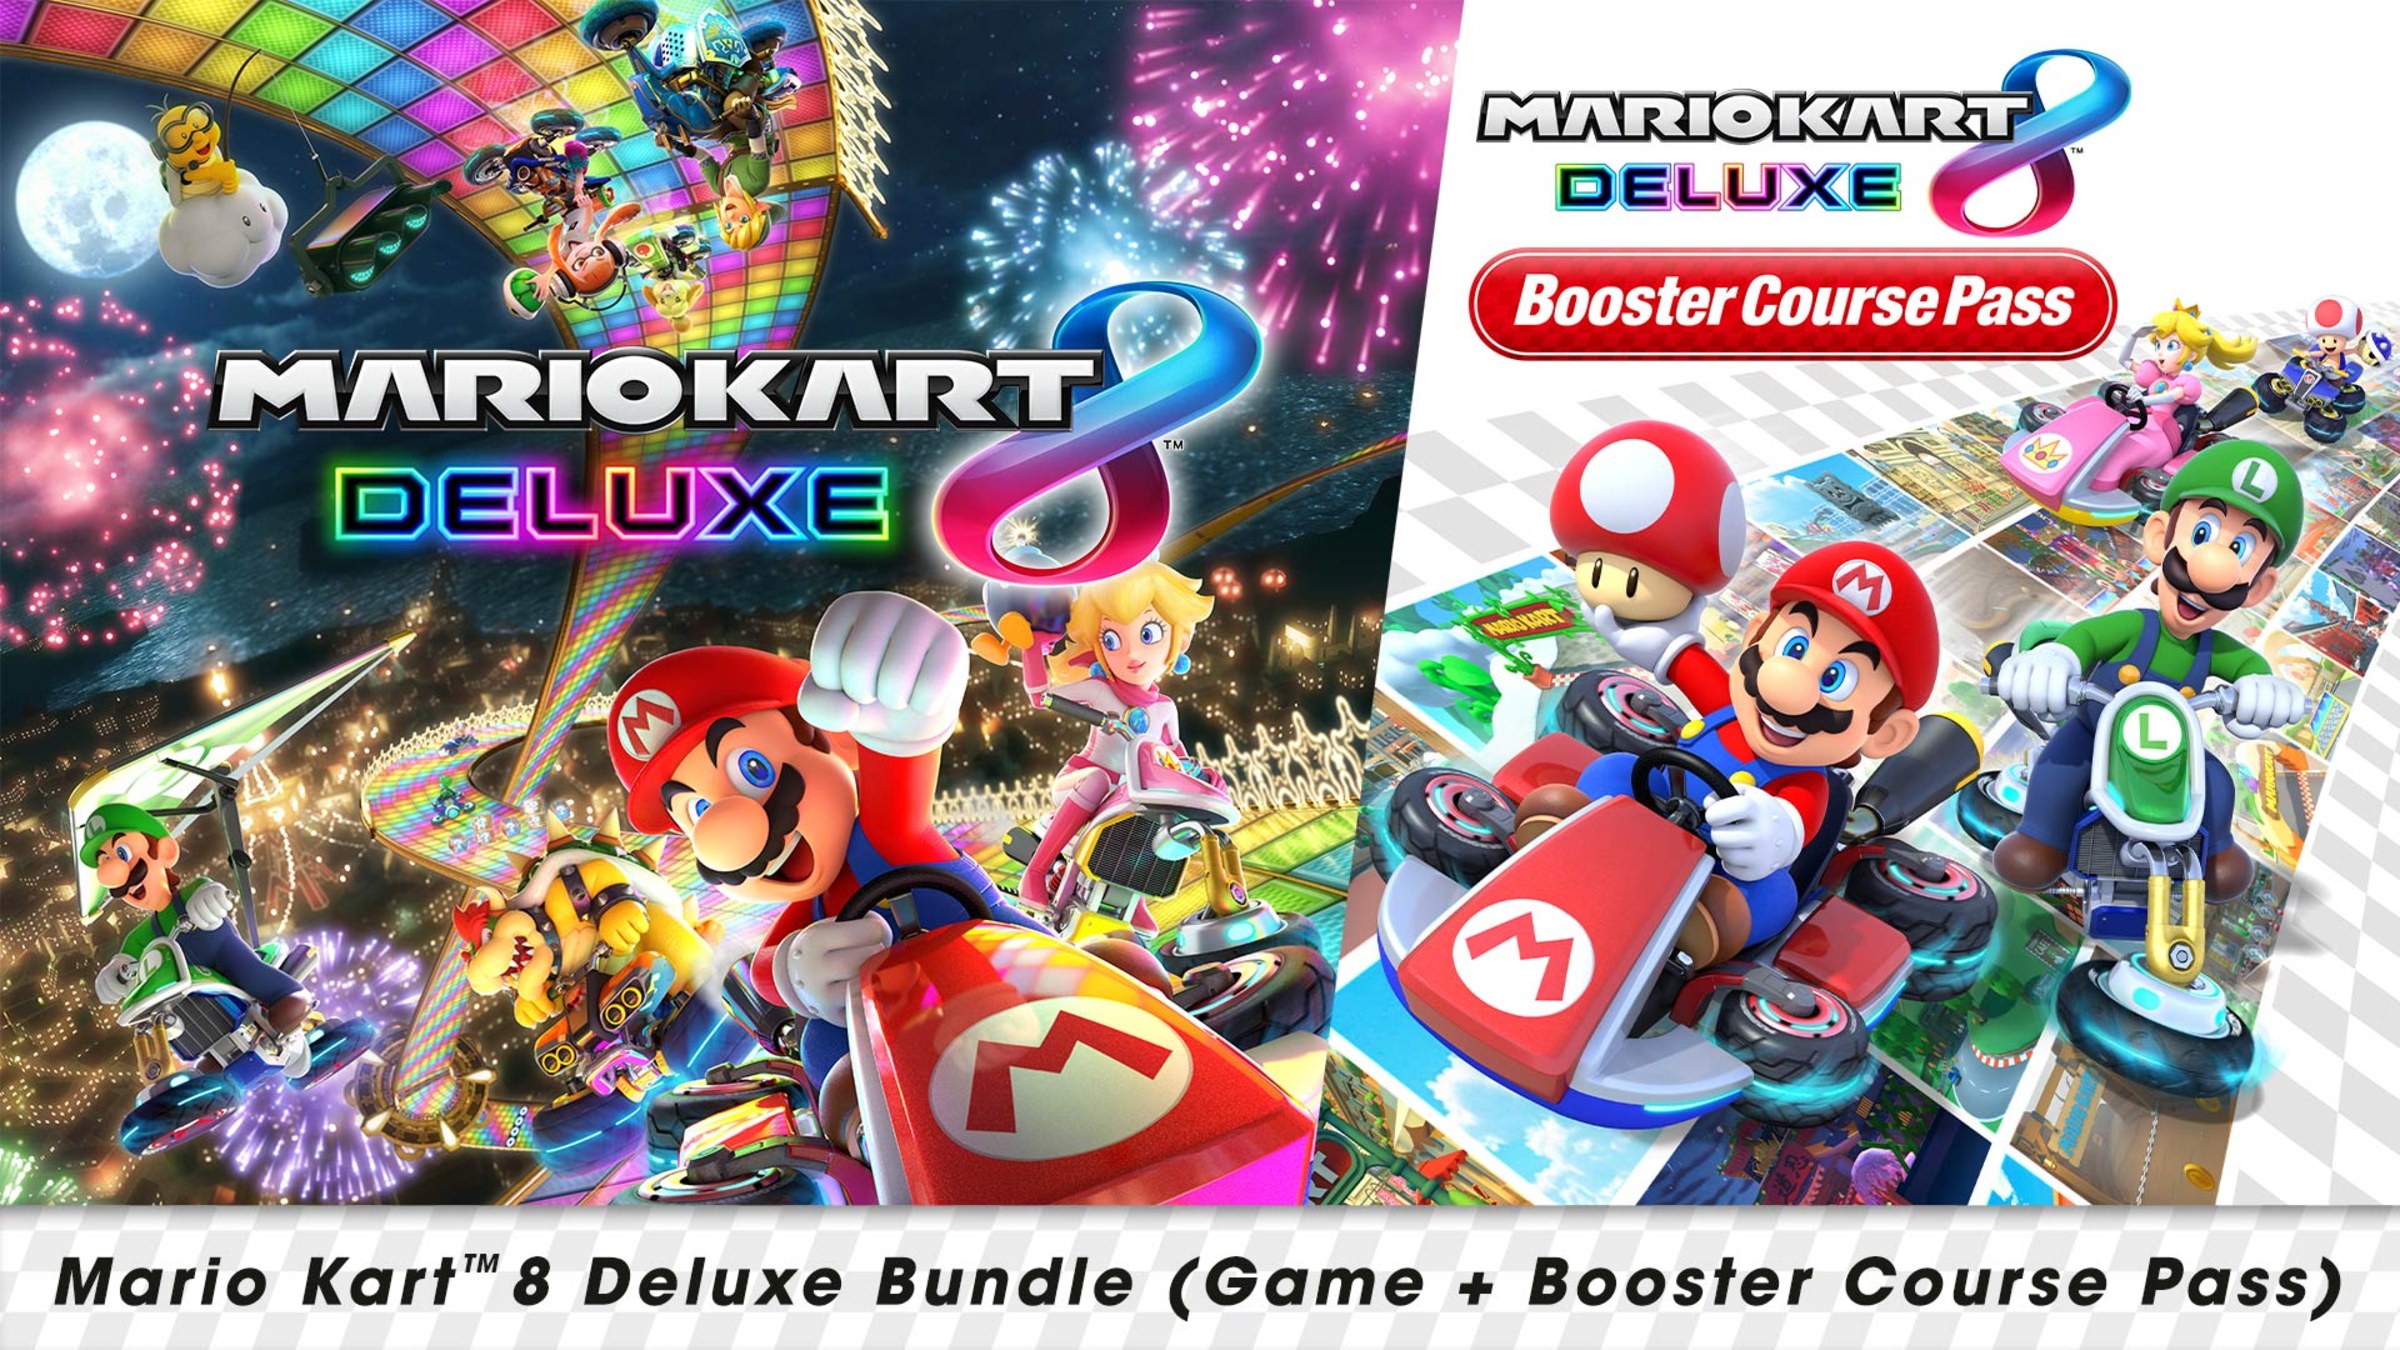 Mario Kart™ 8 Deluxe (Game + Booster Course Pass) Nintendo Switch - Nintendo Official Site